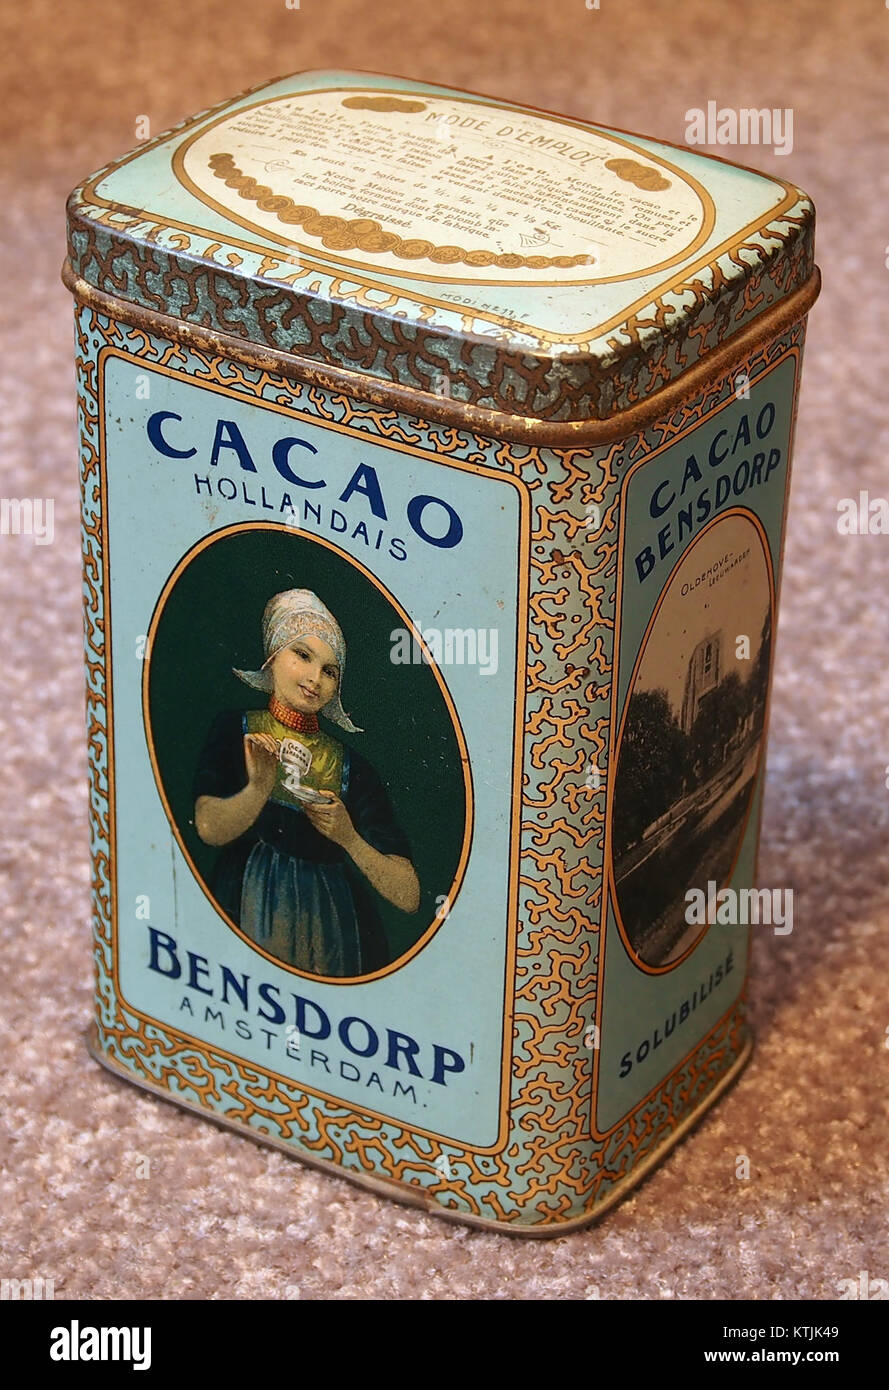 Bensdorp cacao hollandais blikje, foto 5 Stock Photo